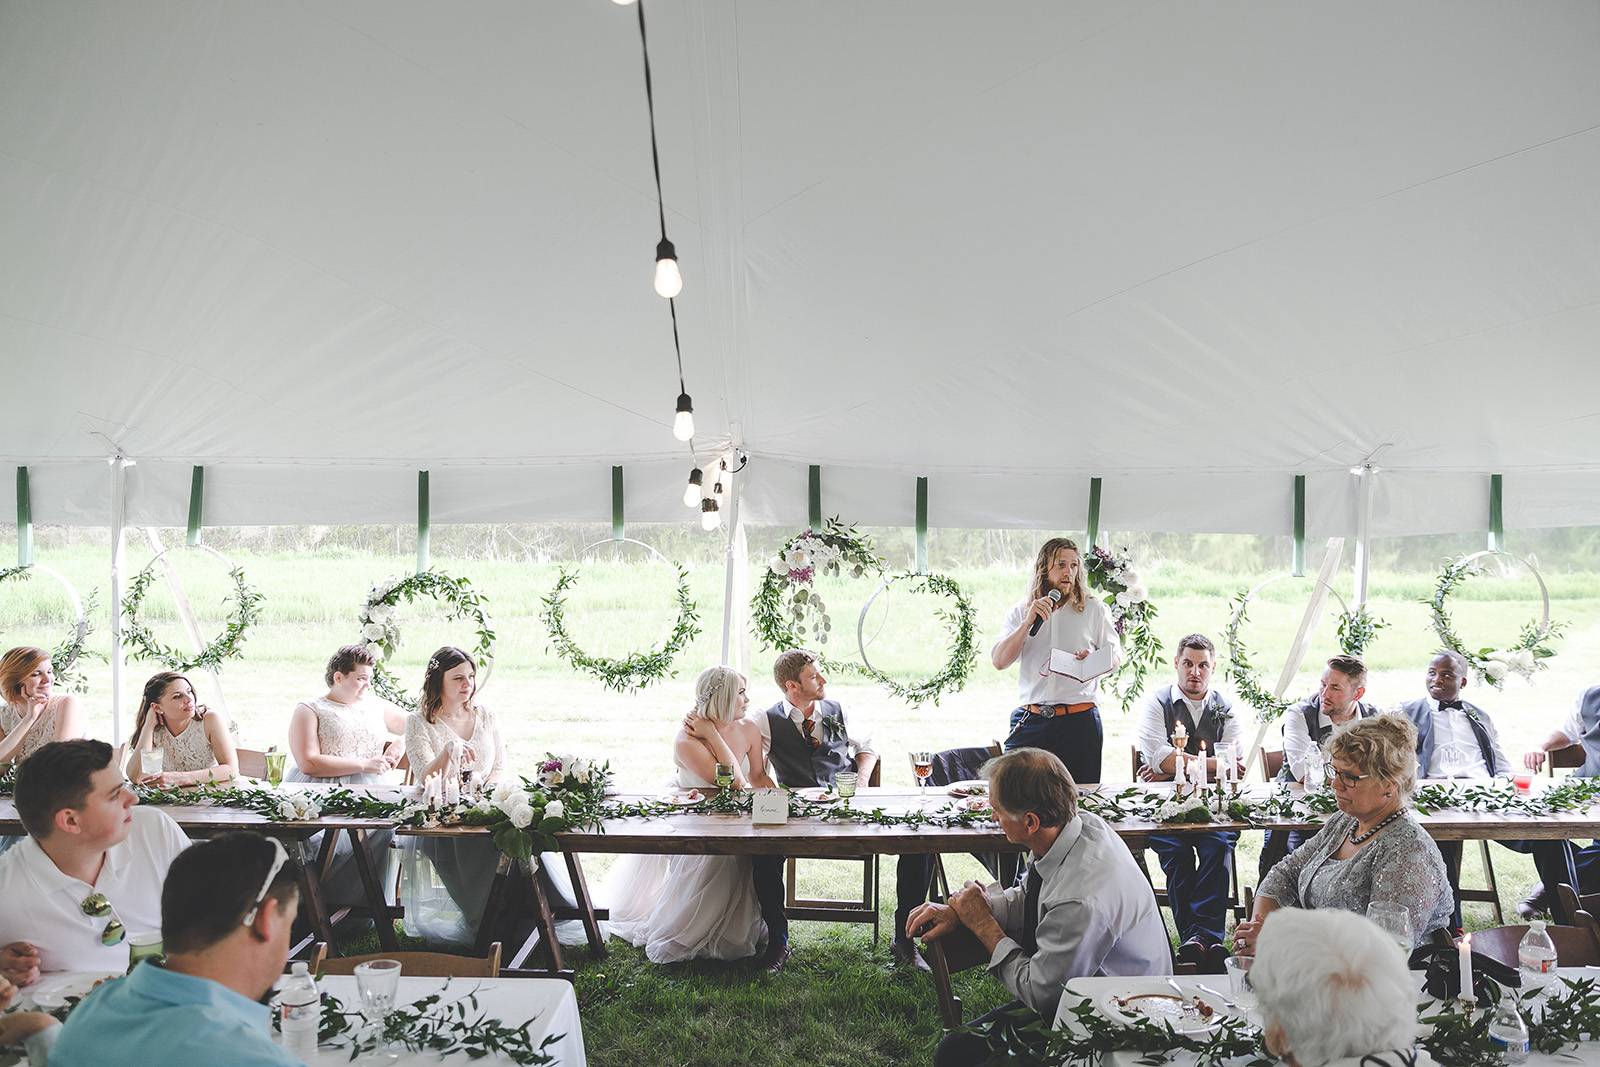 outdoor tent wedding decor, head table wood harvest tables